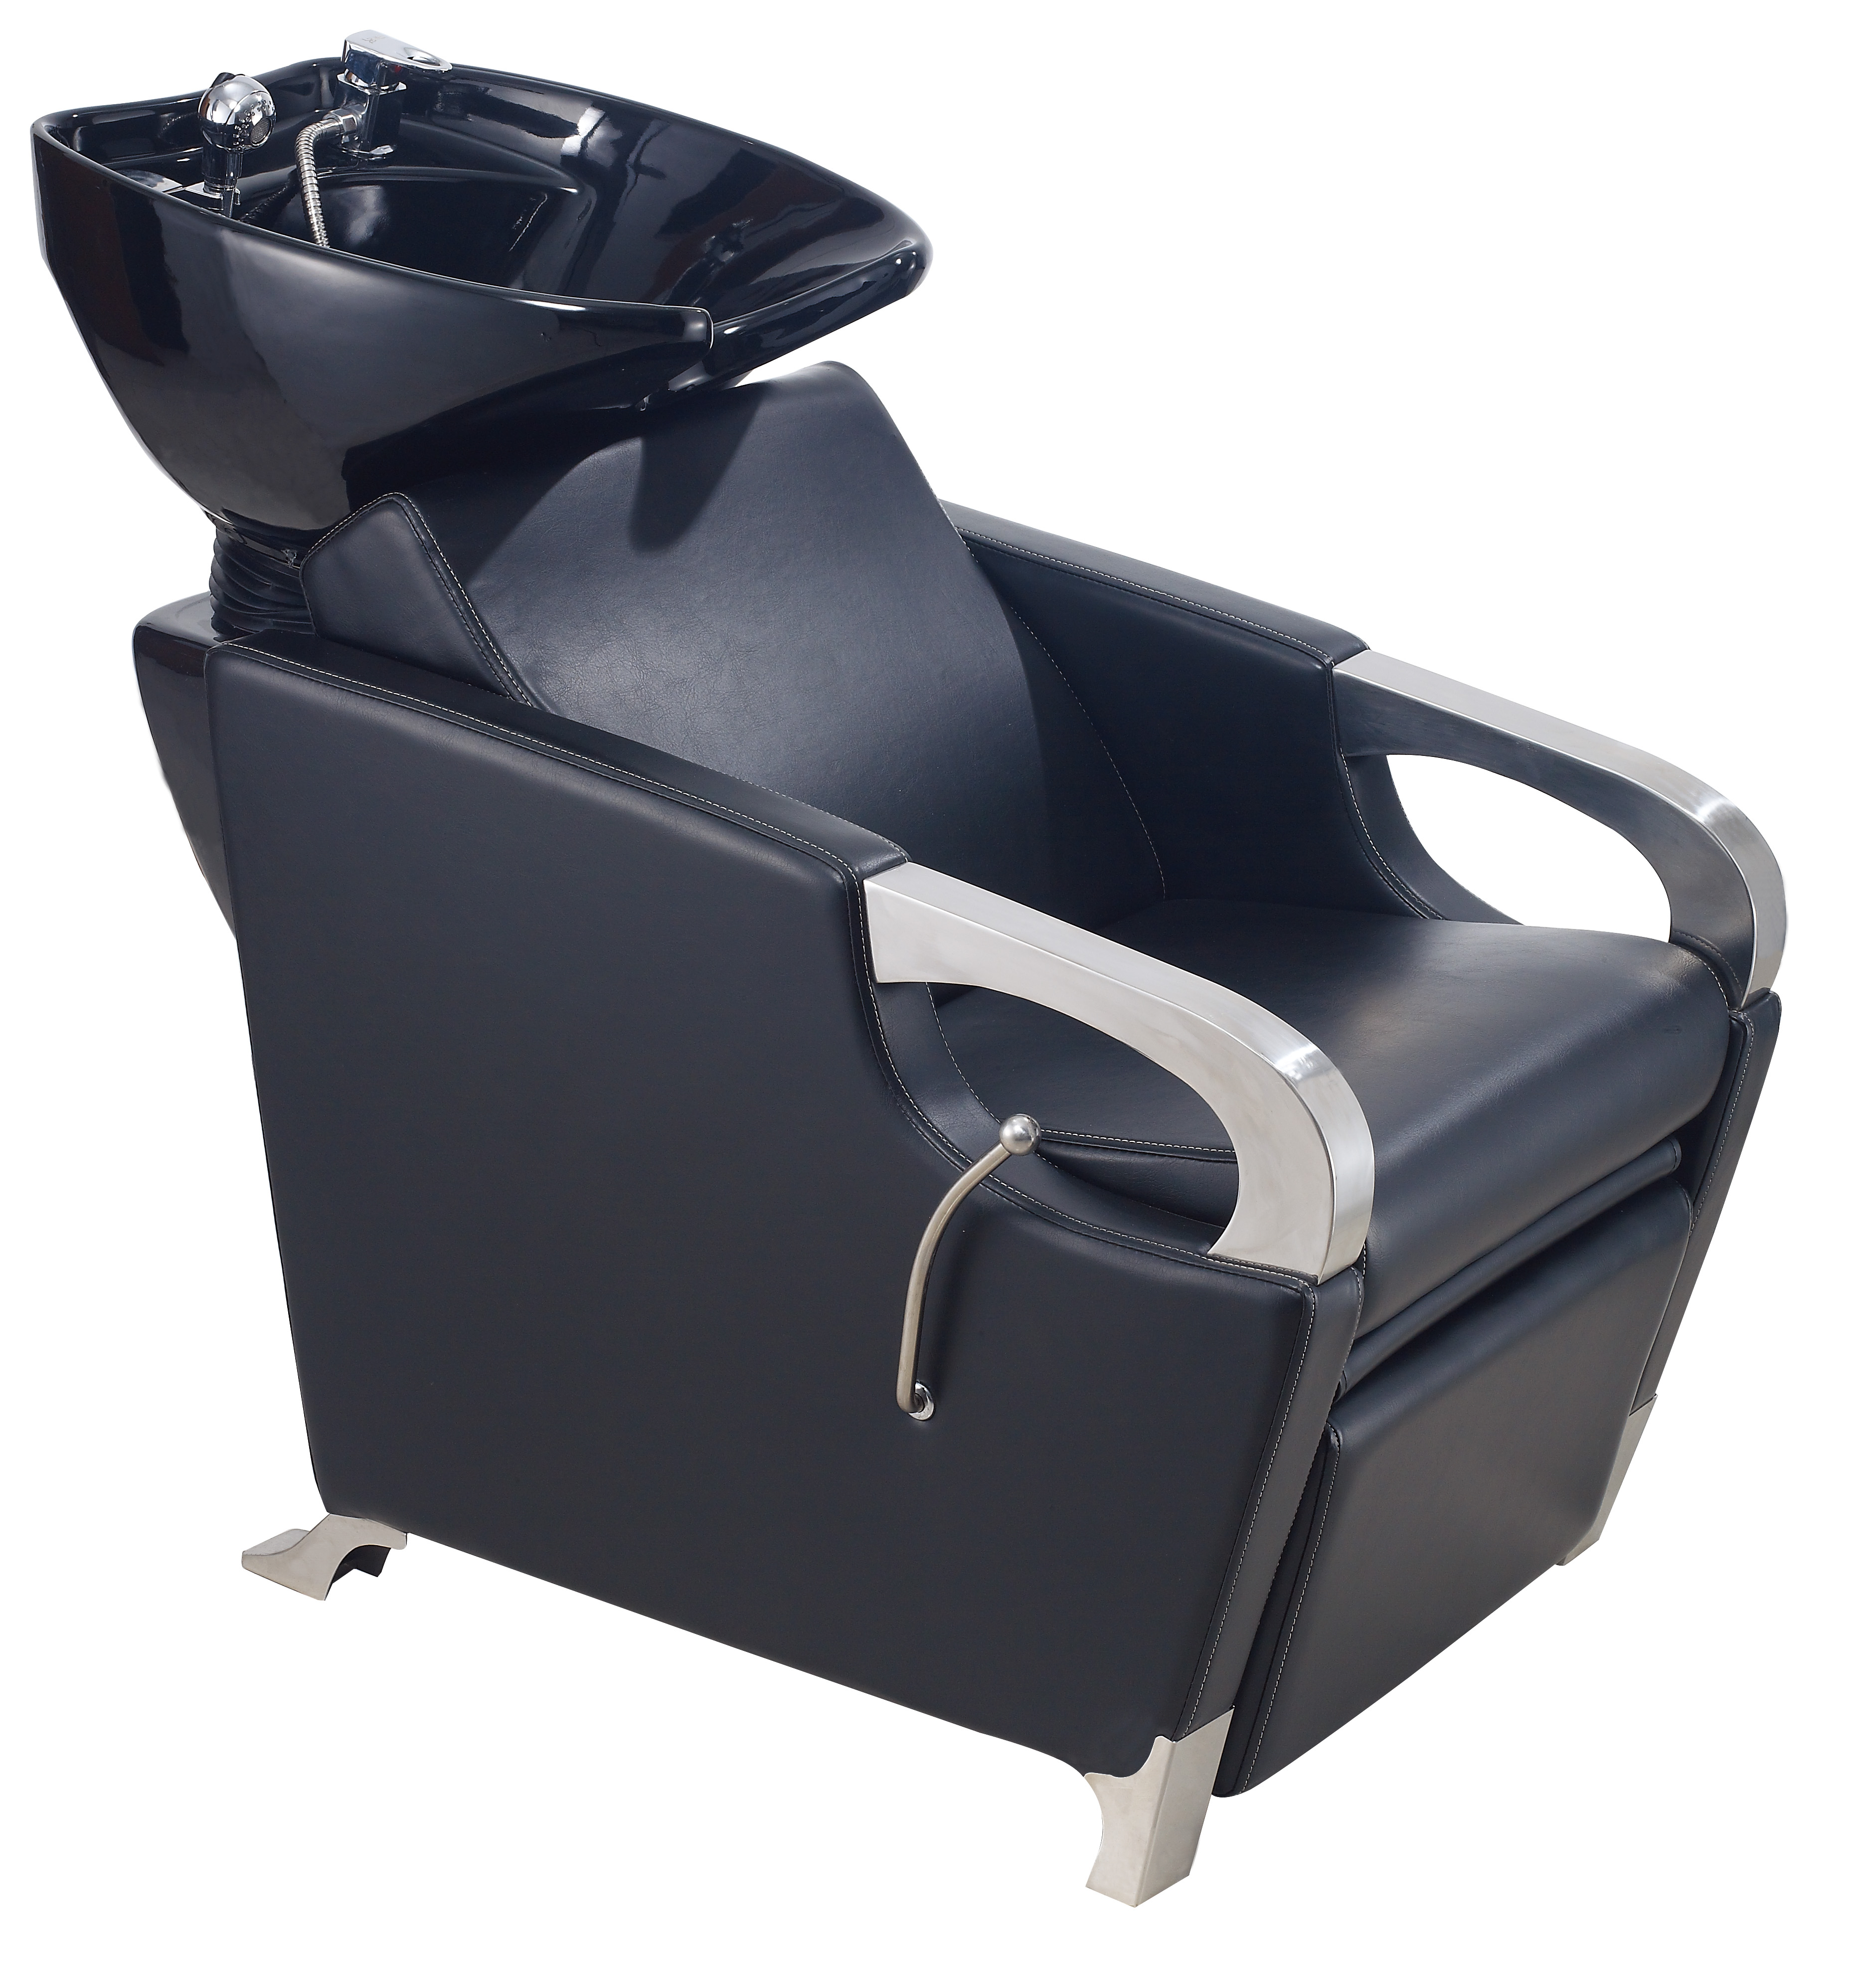 Portable Salon Hair Washing Units Shampoo Chairs with Basin